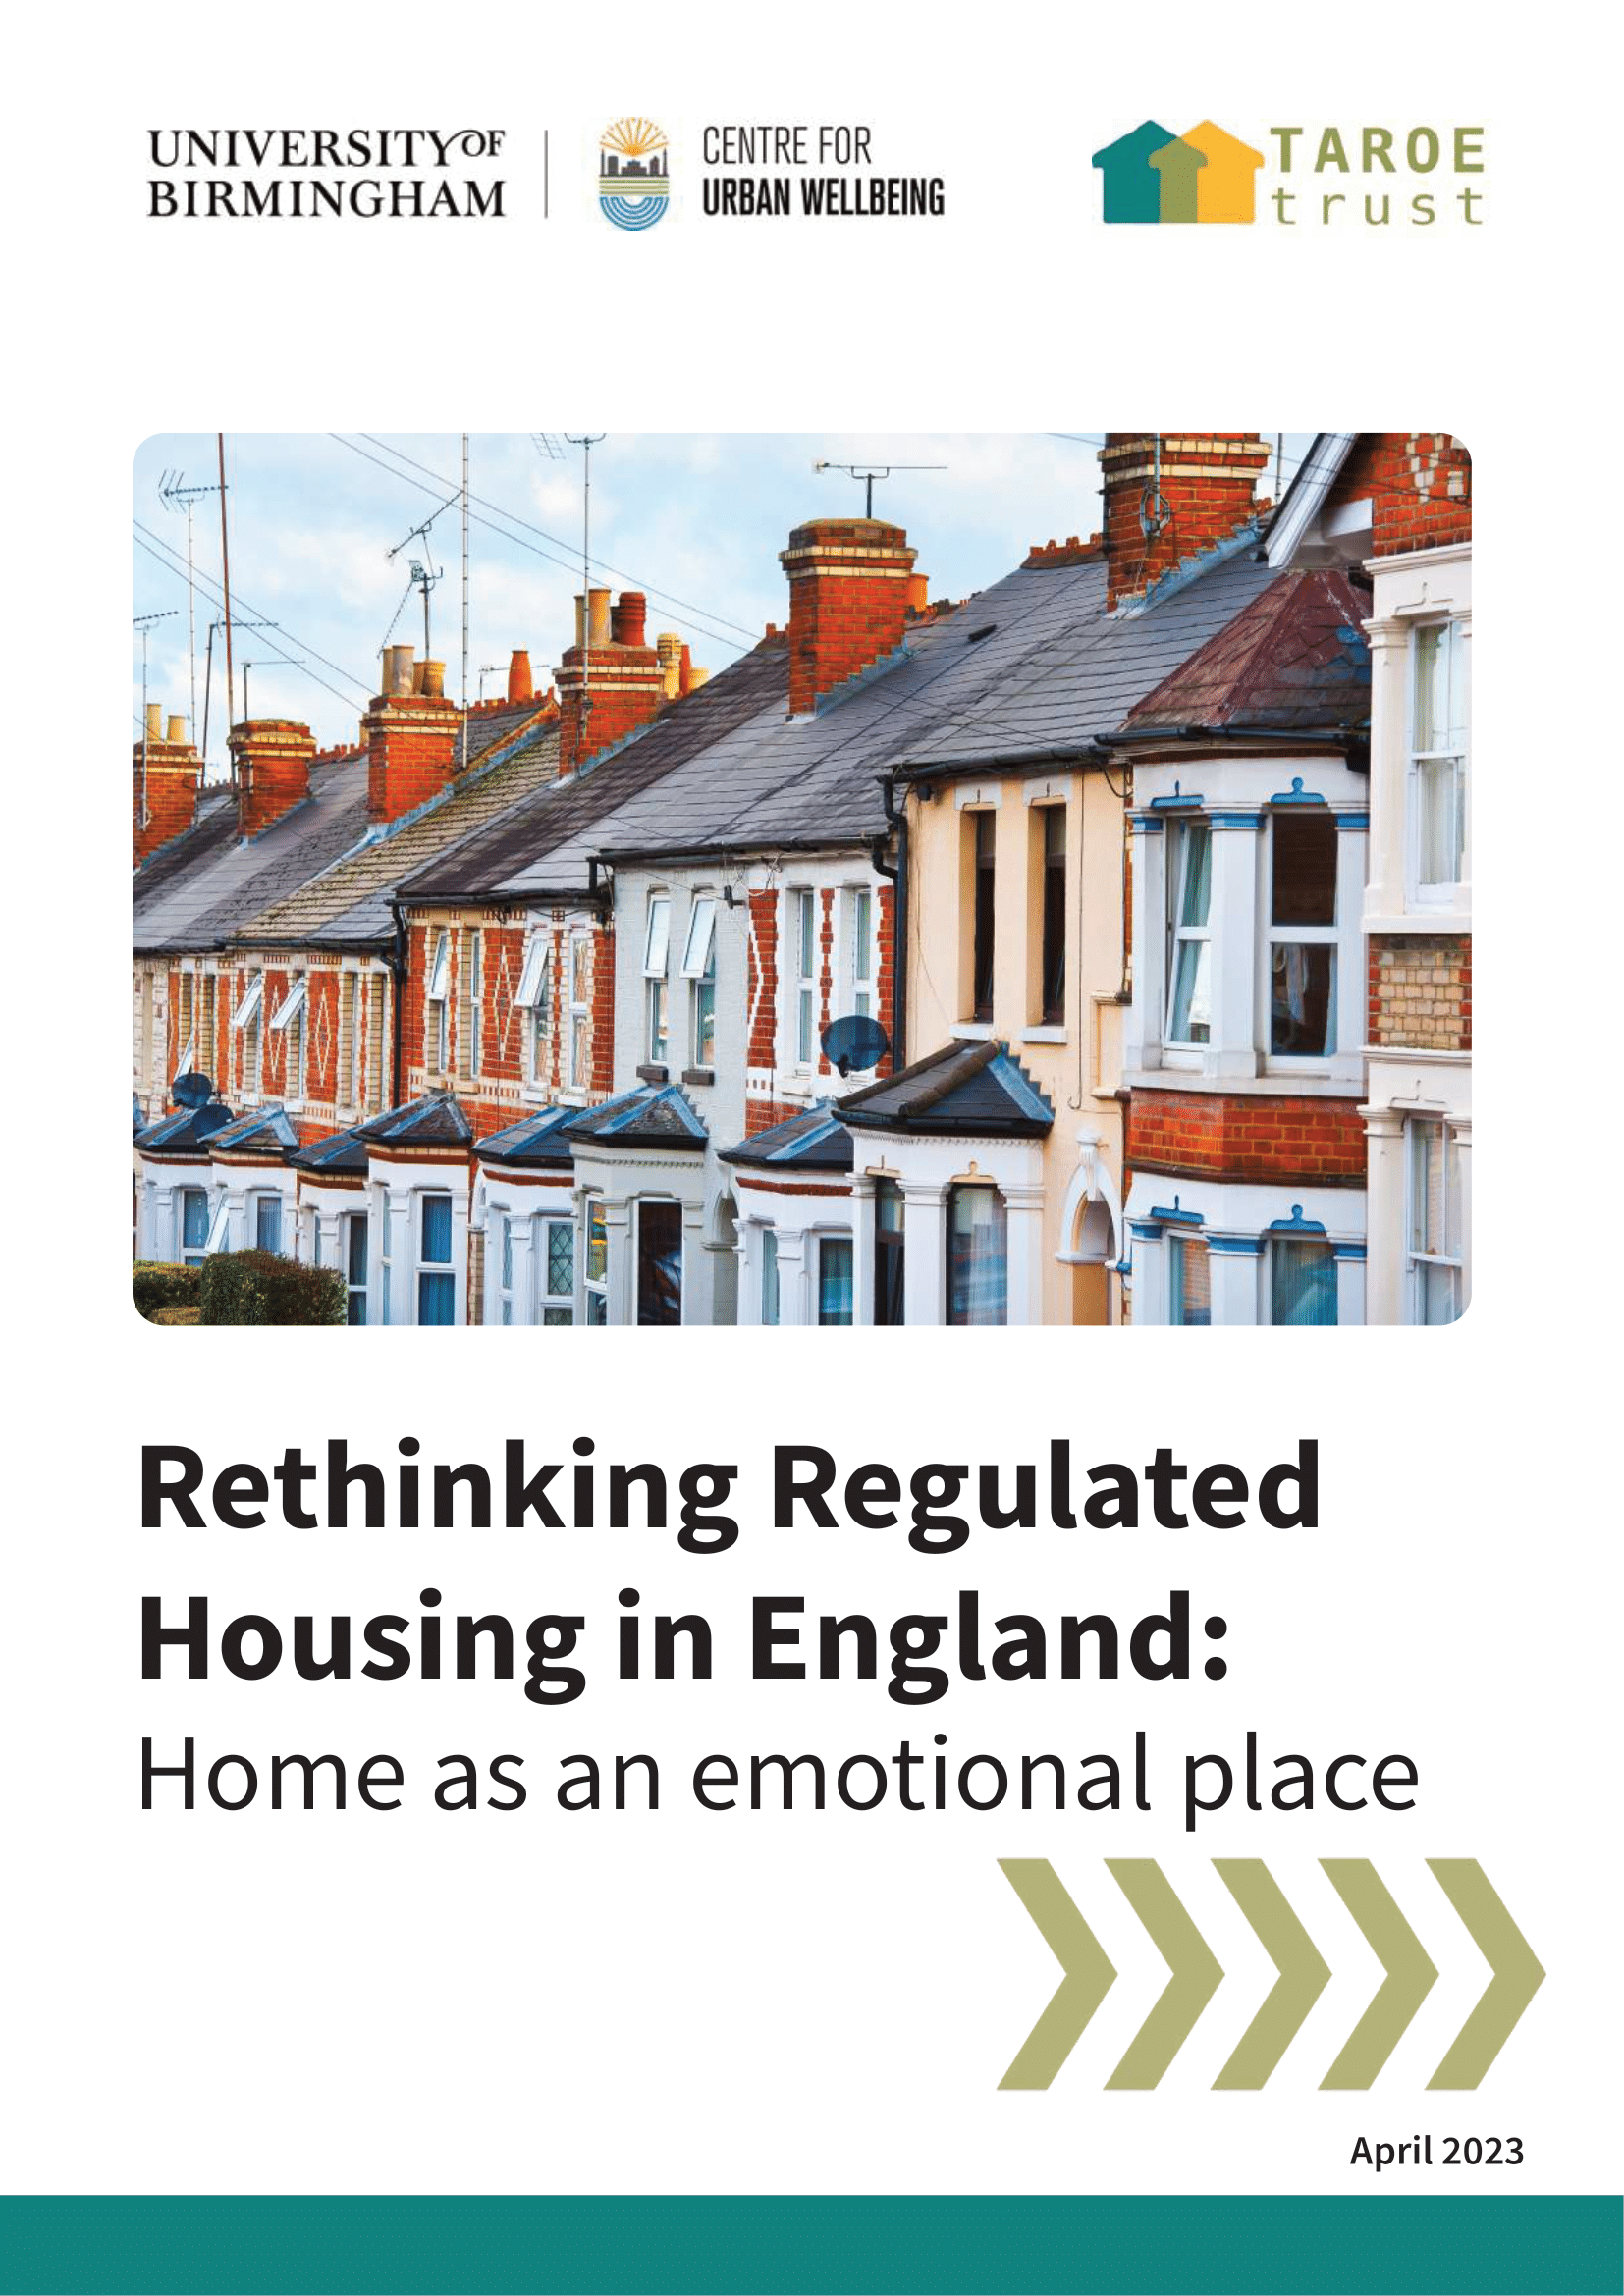 Taroe Trust UoB Rethinking Regulated Housing in England V5_compressed-01